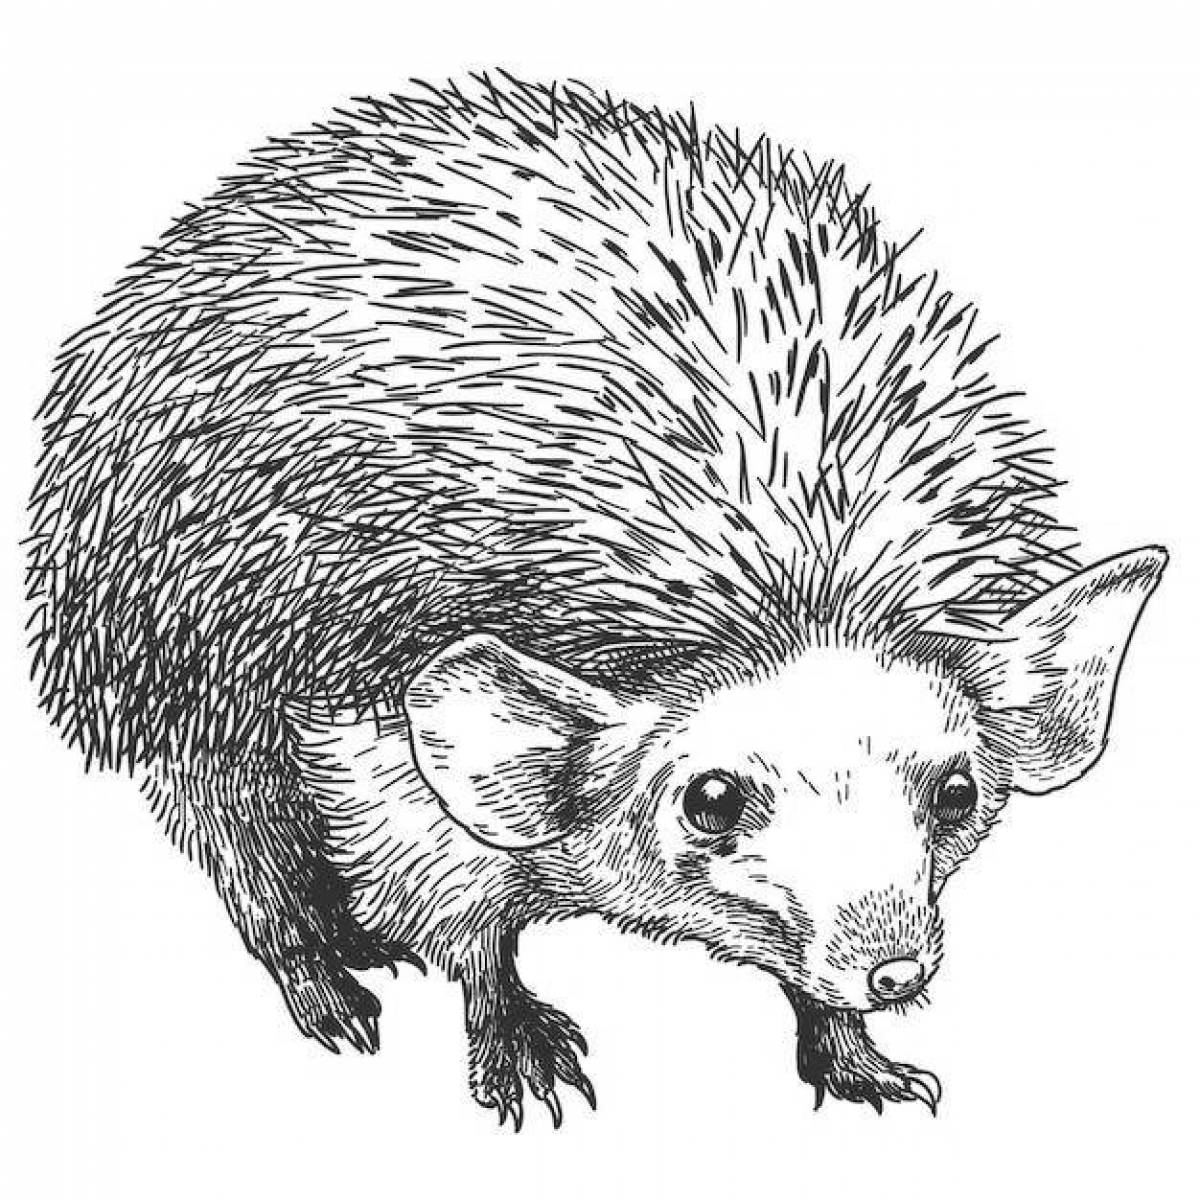 Coloring live long-eared hedgehog